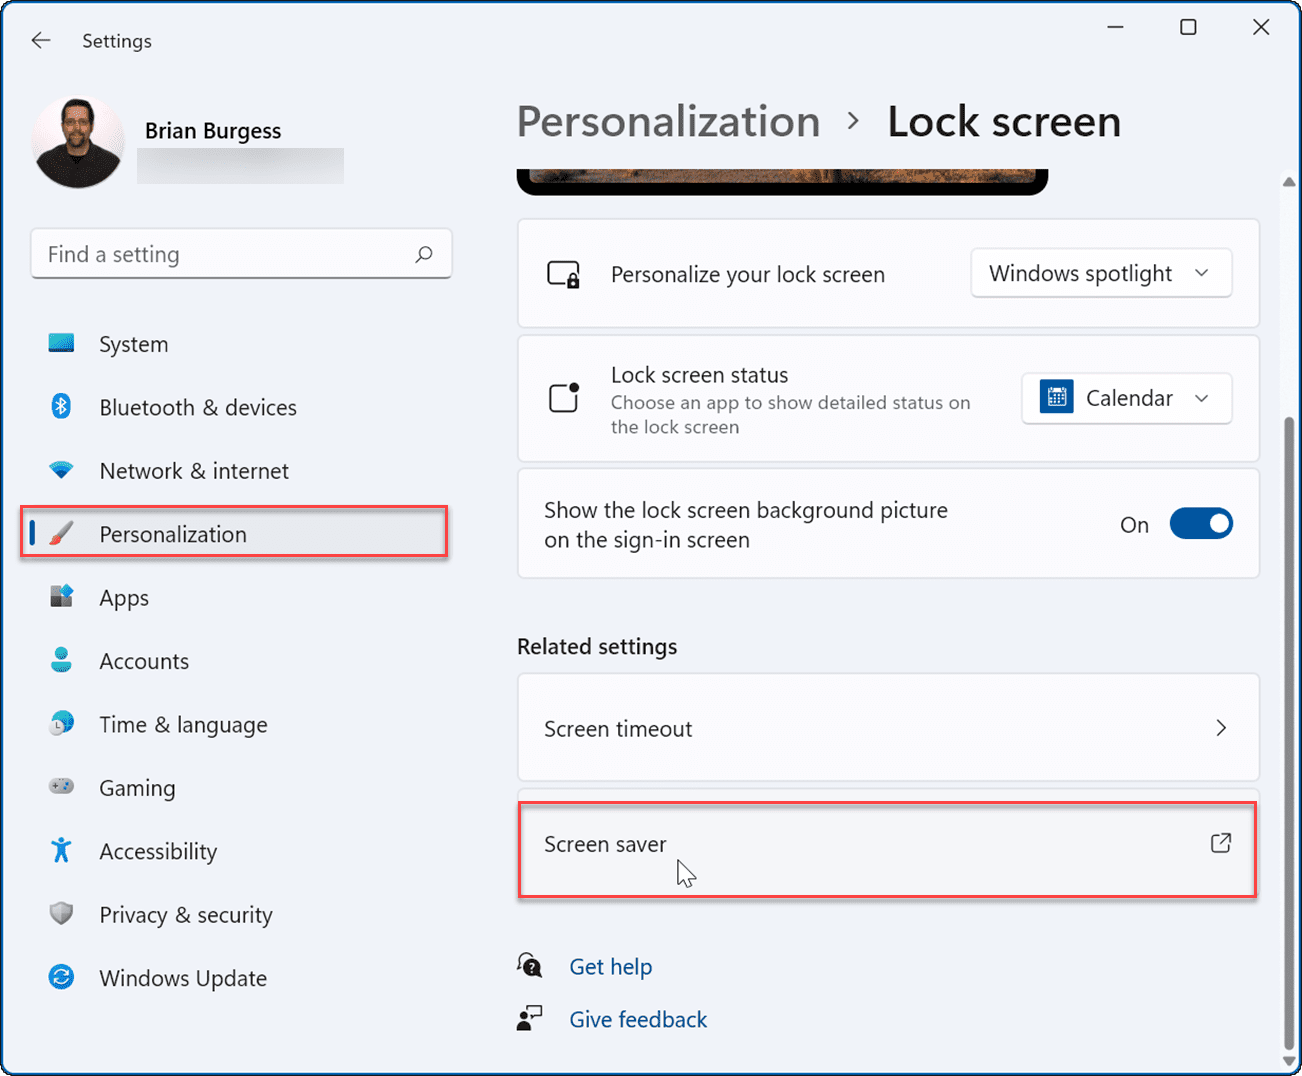 2-Personalization-lock-screen-set-photos-as-a-screen-saver-on-Windows-1